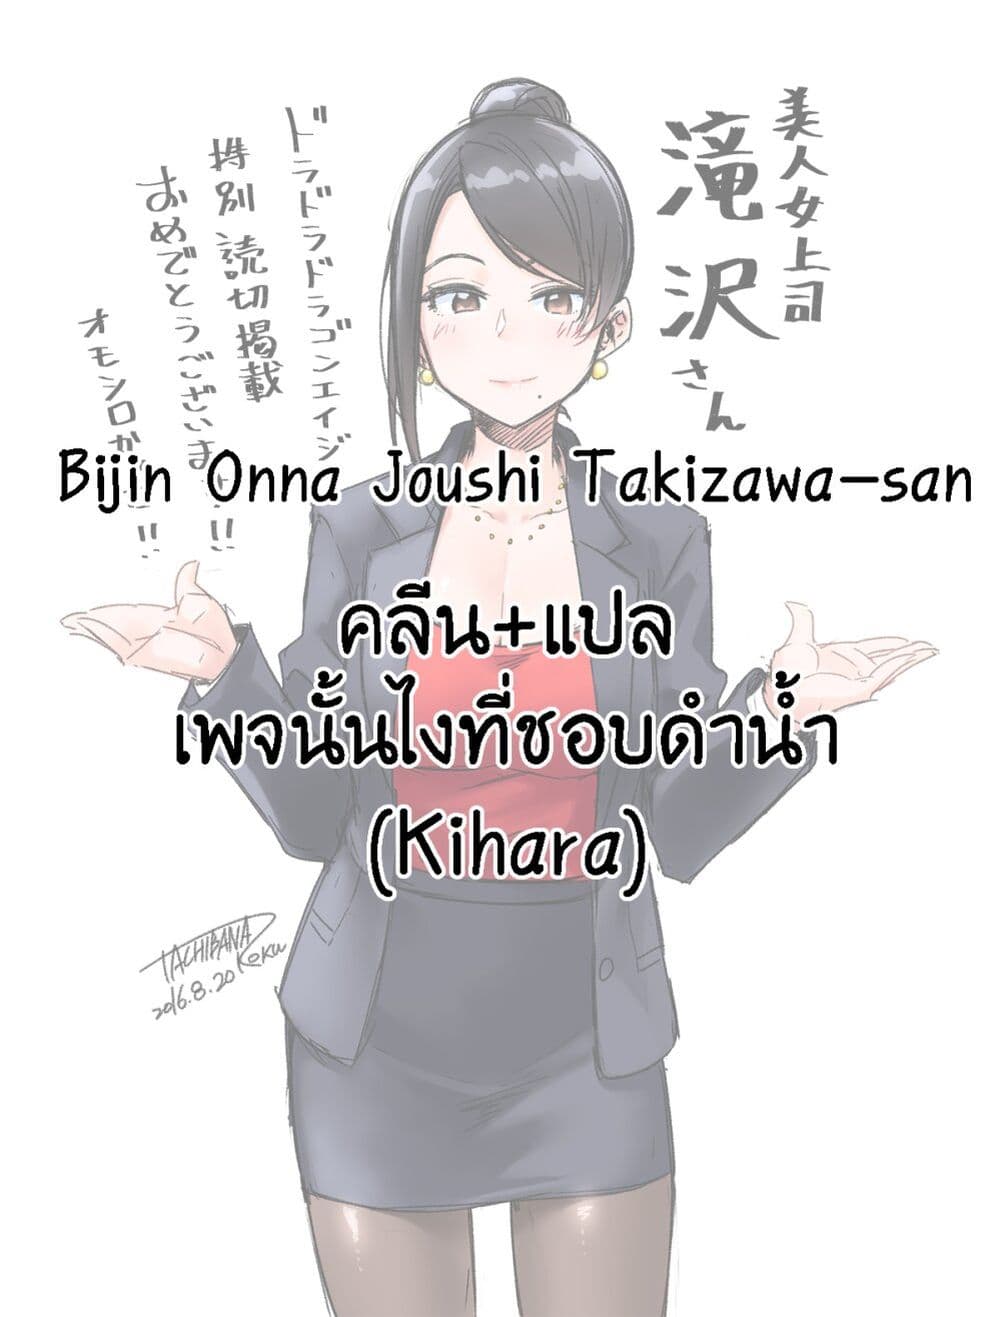 Bijin Onna Joushi Takizawa-san หัวหน้าสุดสวย ทากิซาวะซัง 24-24